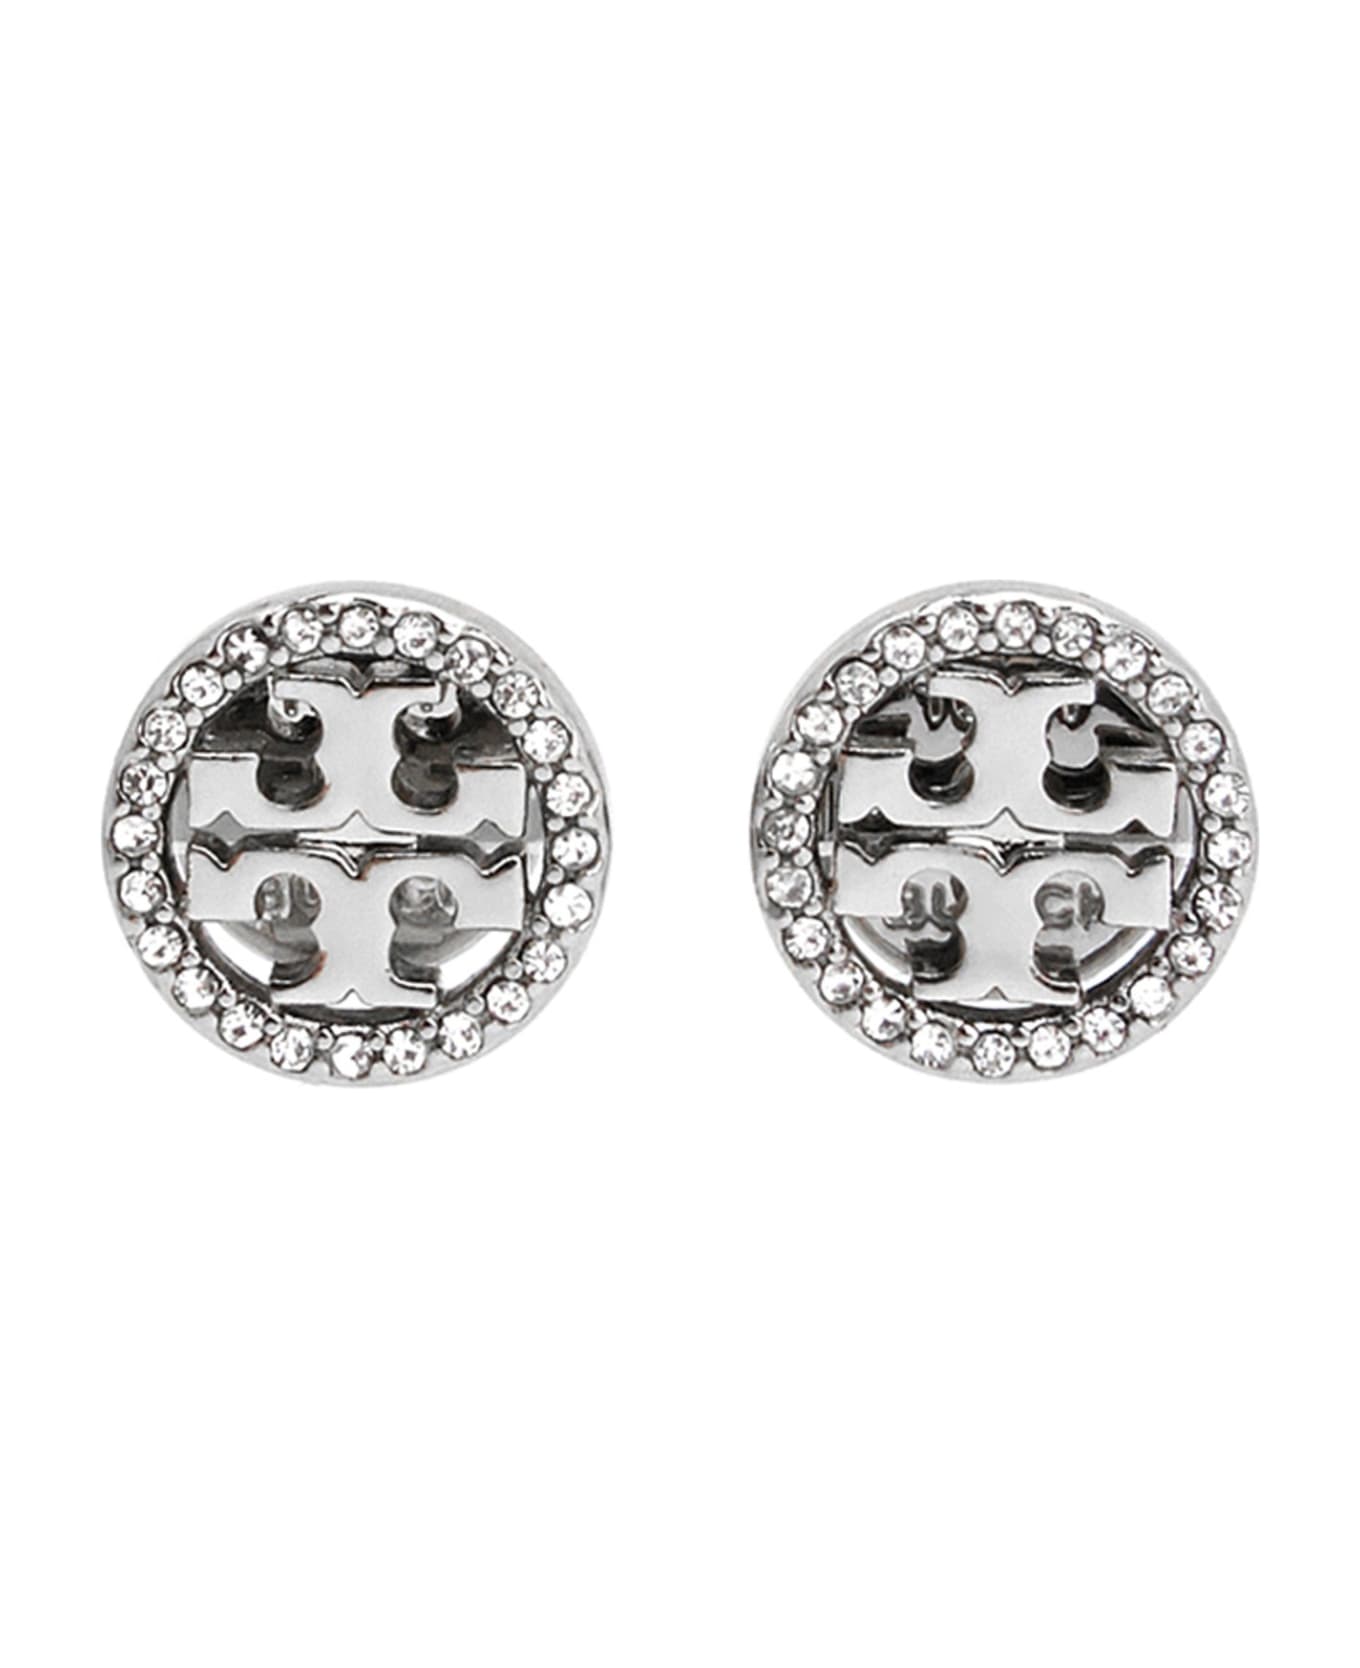 Tory Burch Circle-stud Crystal Logo Earrings - Silver/crystal